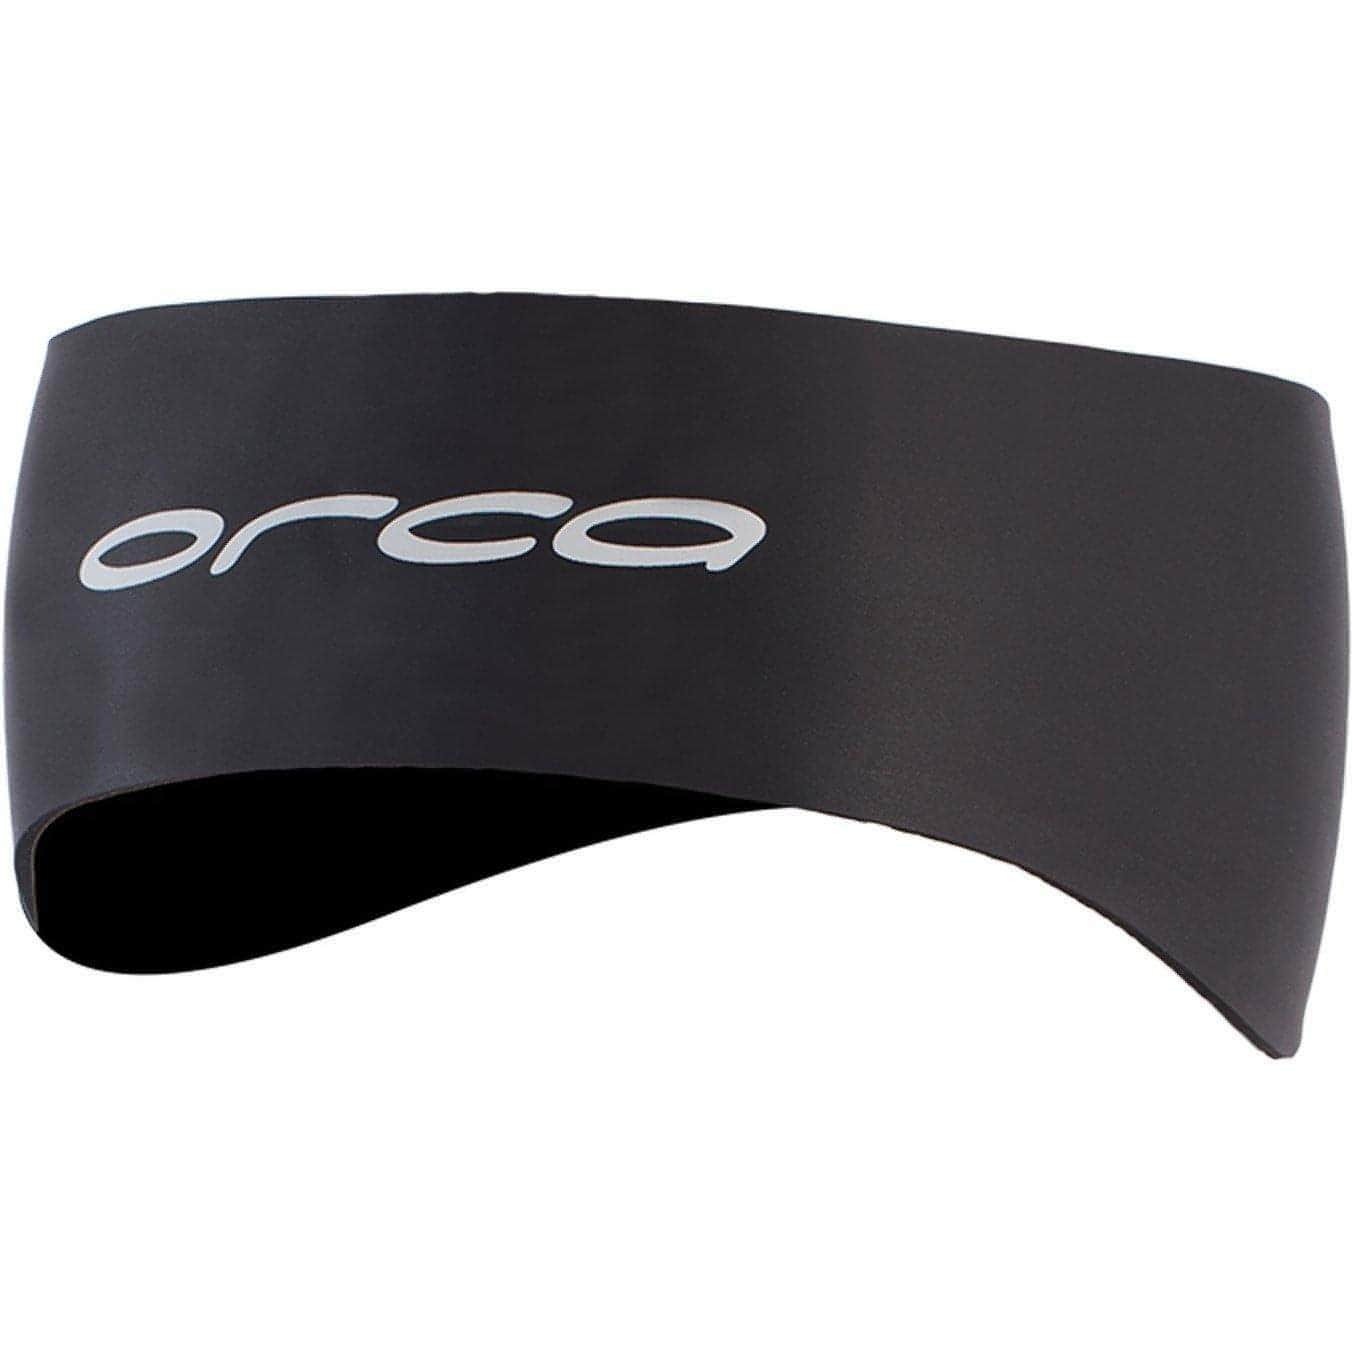 Orca Neoprene Headband - Black 8434446001796 - Start Fitness